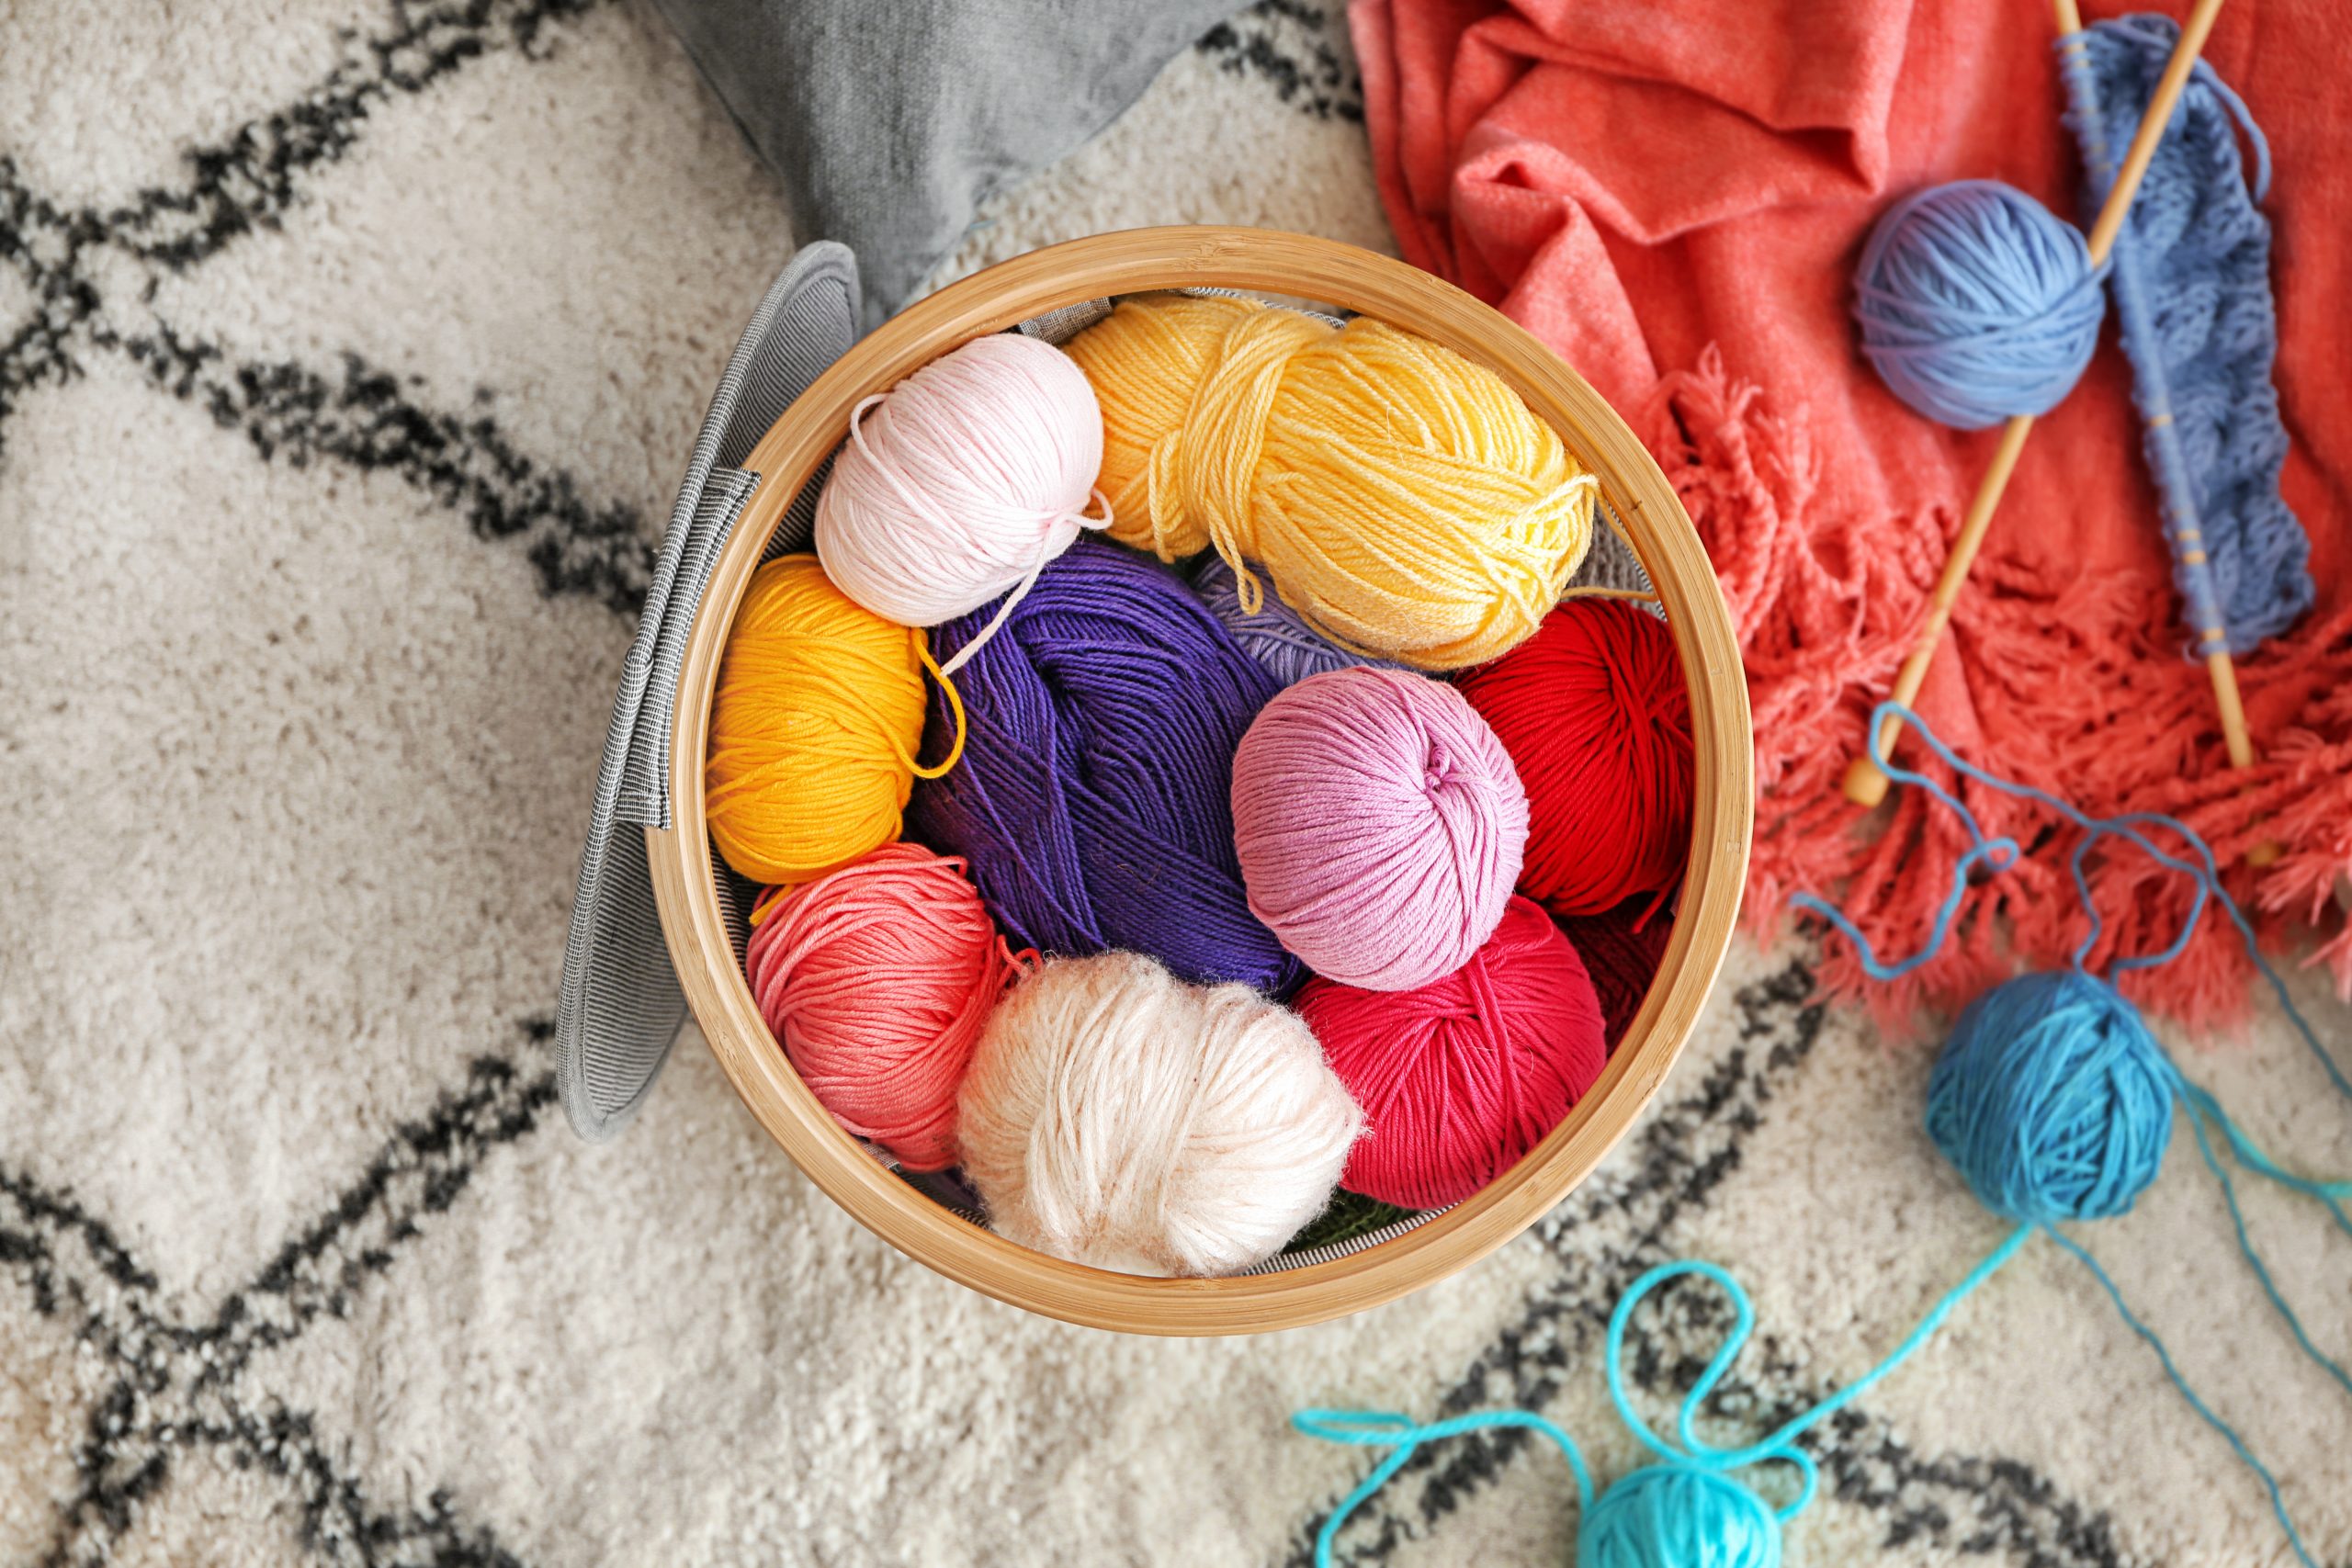 15 Knot-Free Yarn Storage Ideas To Store Your Yarn Stash